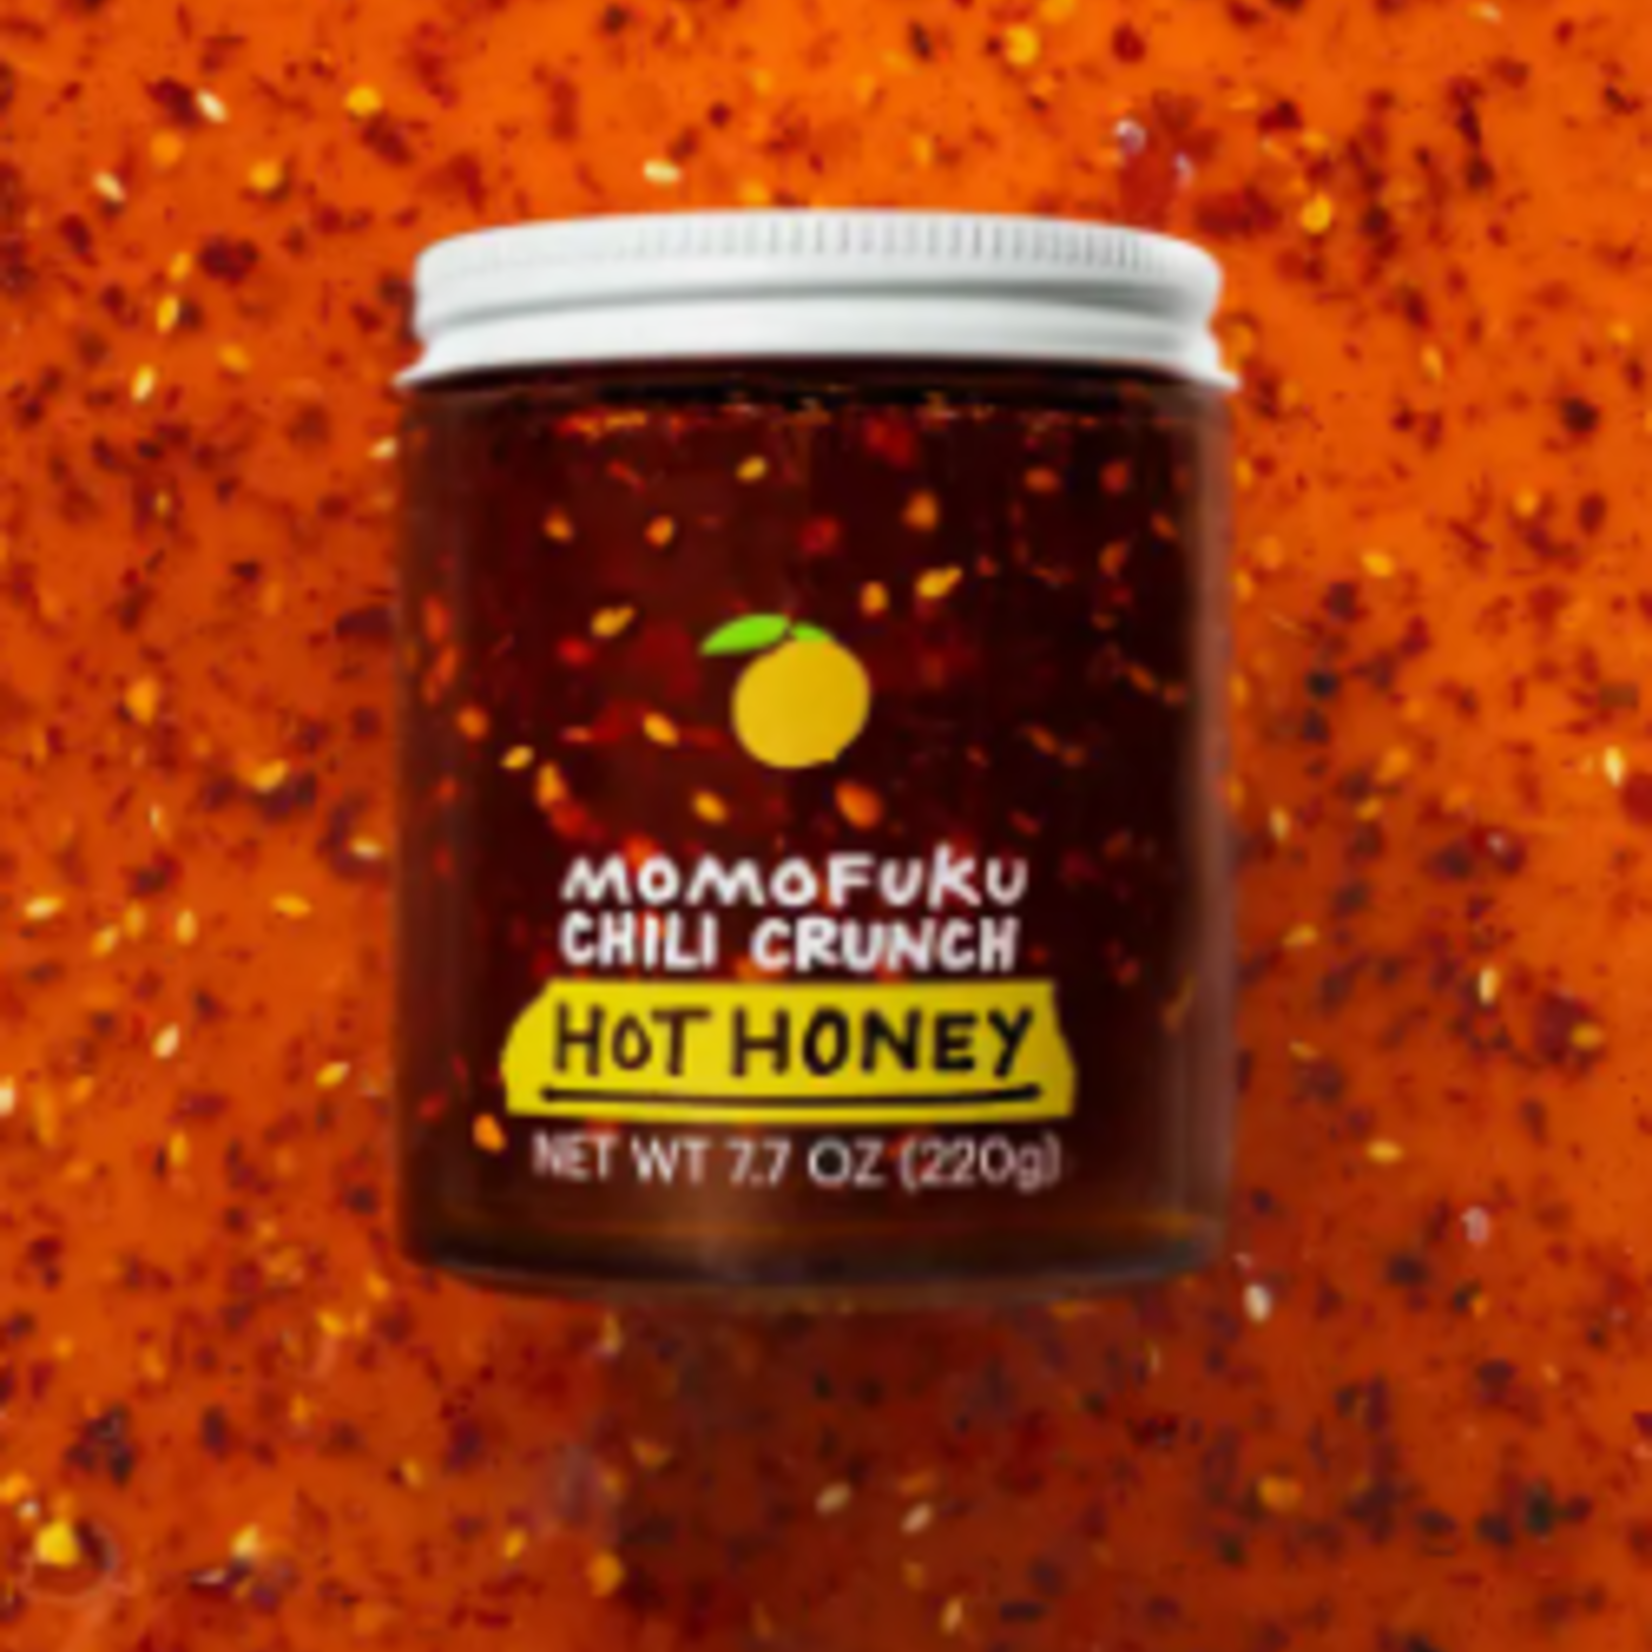 Momofuku Momofuku Chili Crunch Hot Honey